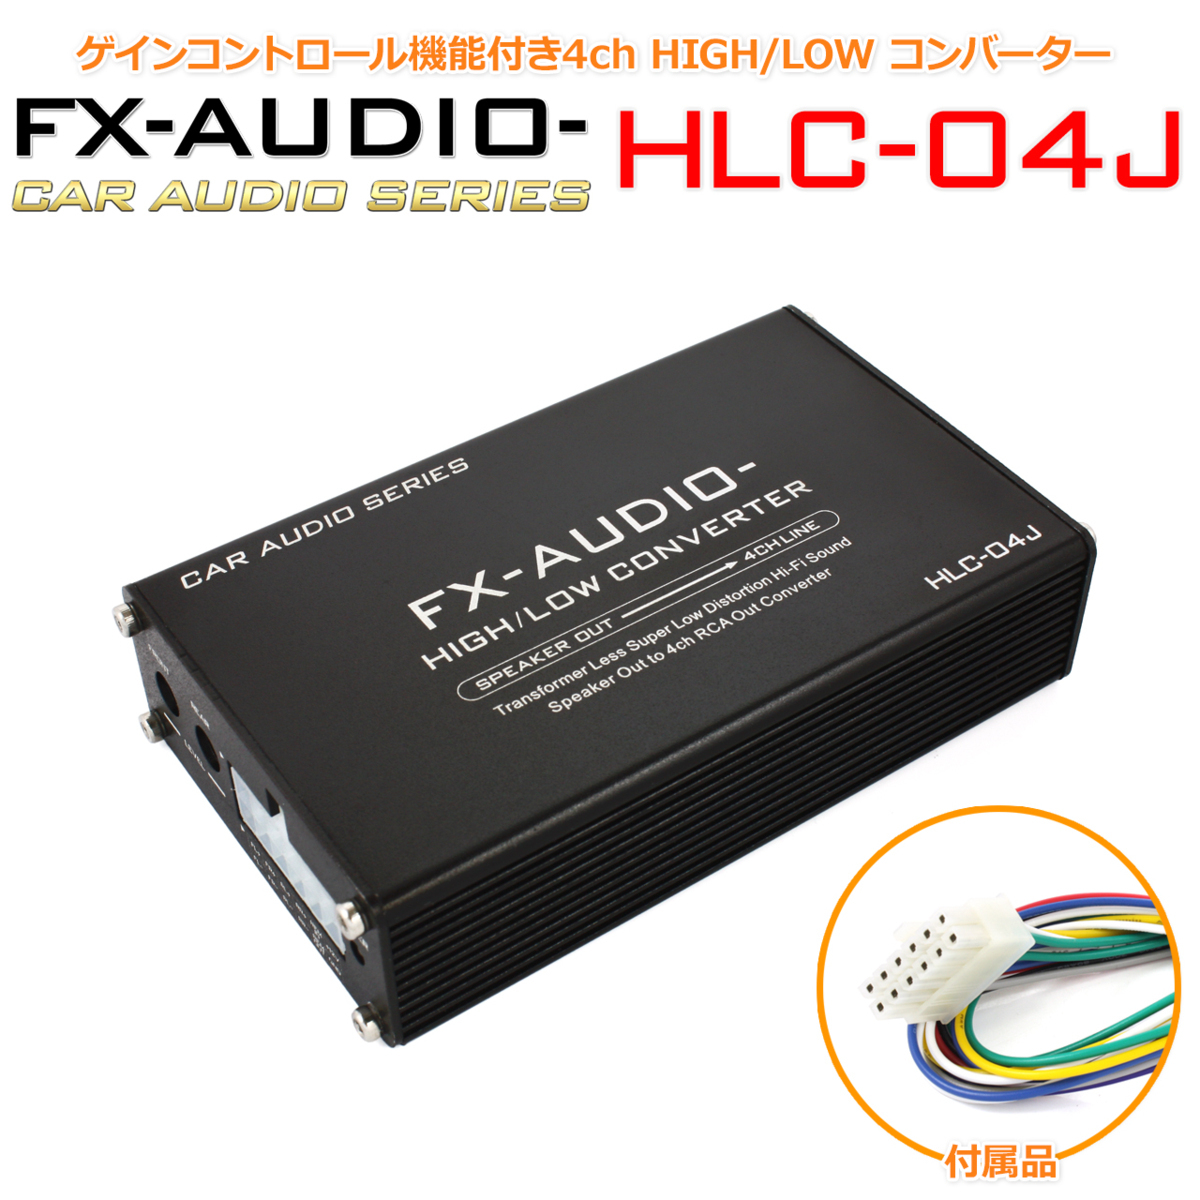 FX-AUDIO- HLC-04J 4ch 高音質 超低歪み ハイ/ロー コンバーター HIGH/LOW CONVERTER [Hi-Lo] スピーカー出力→RCA変換_画像1